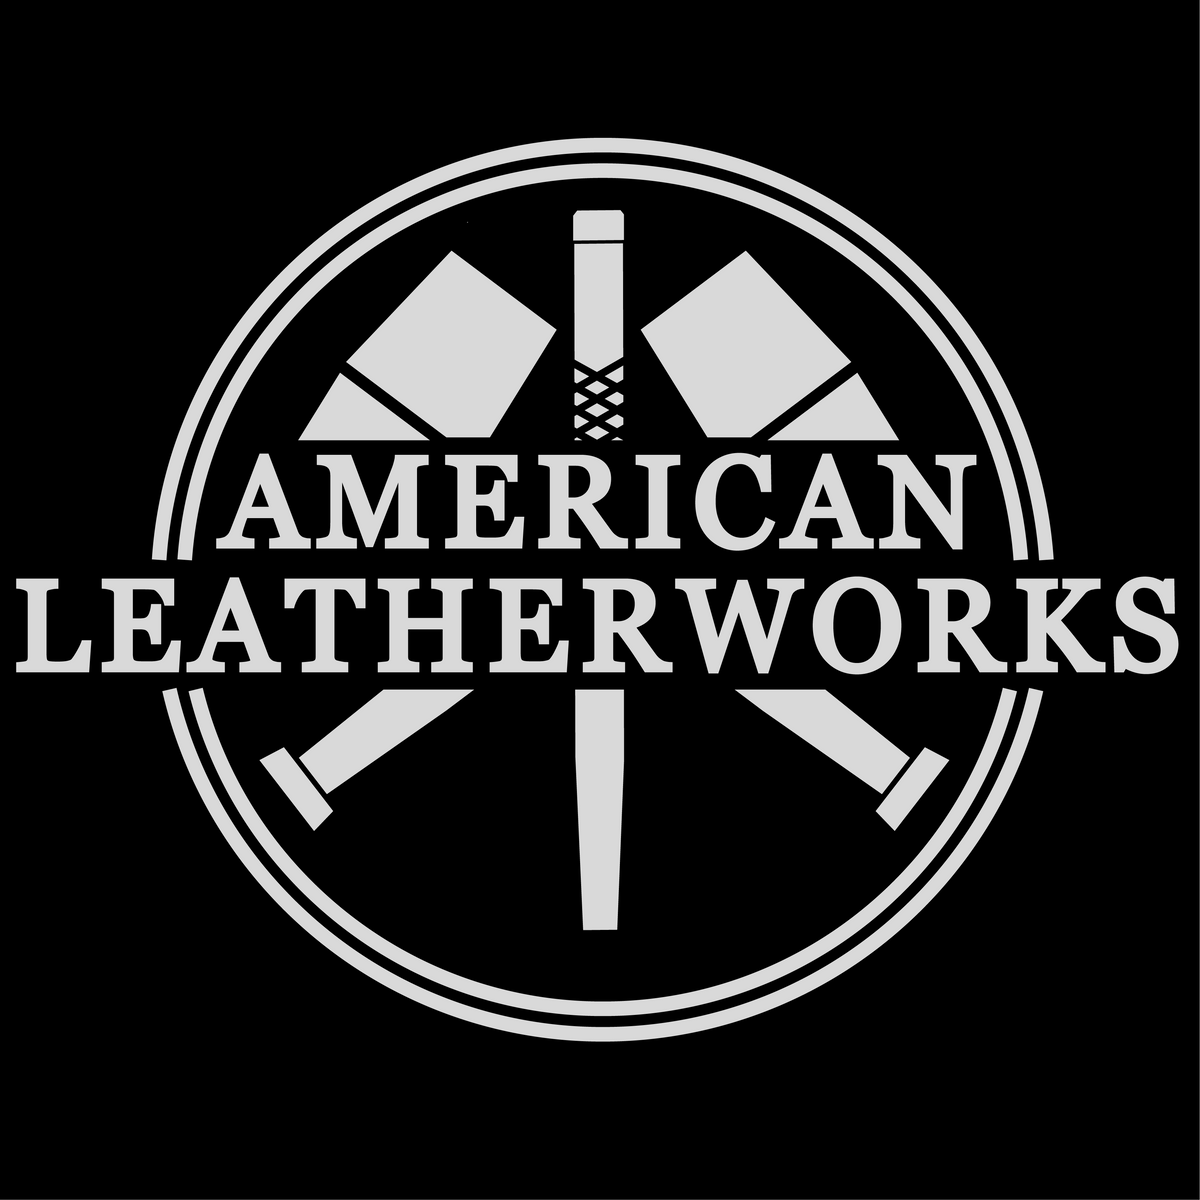 American Leatherworks